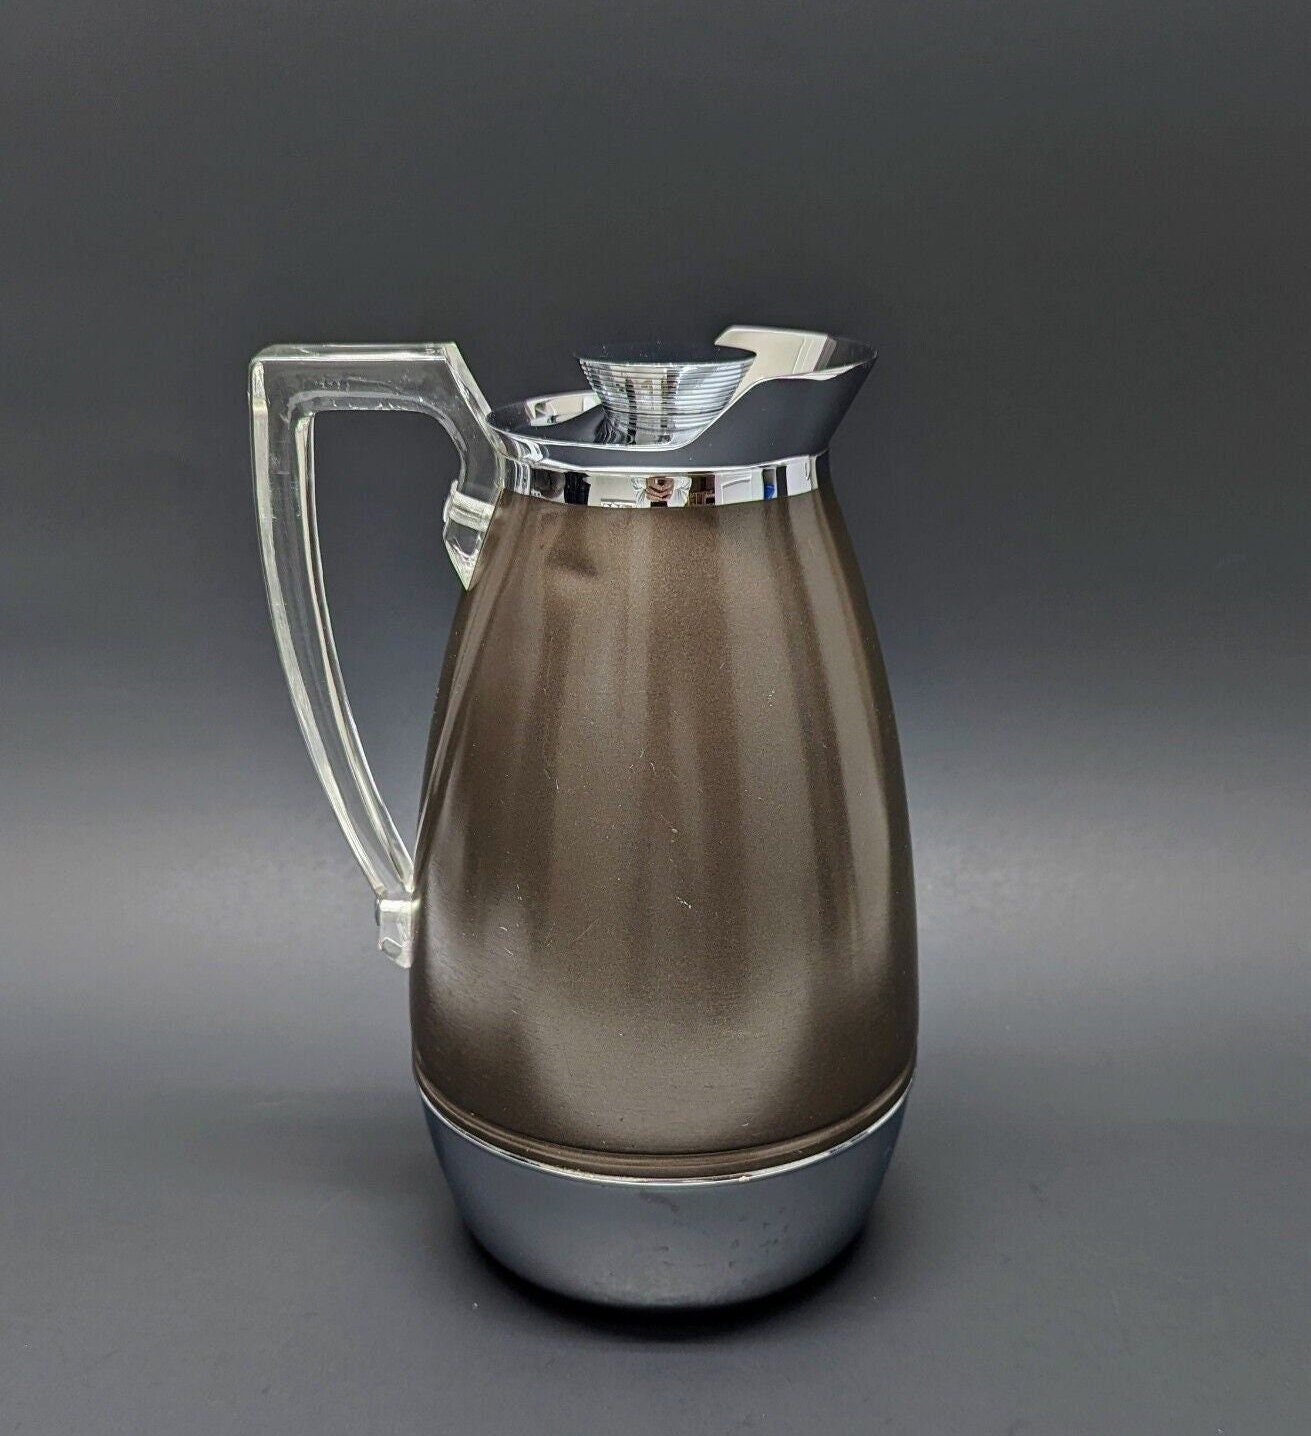 NOS Vintage Thermos Coffee Butler Hot Drink Carafe 32 Oz Model 1000/L48547  w/Tag